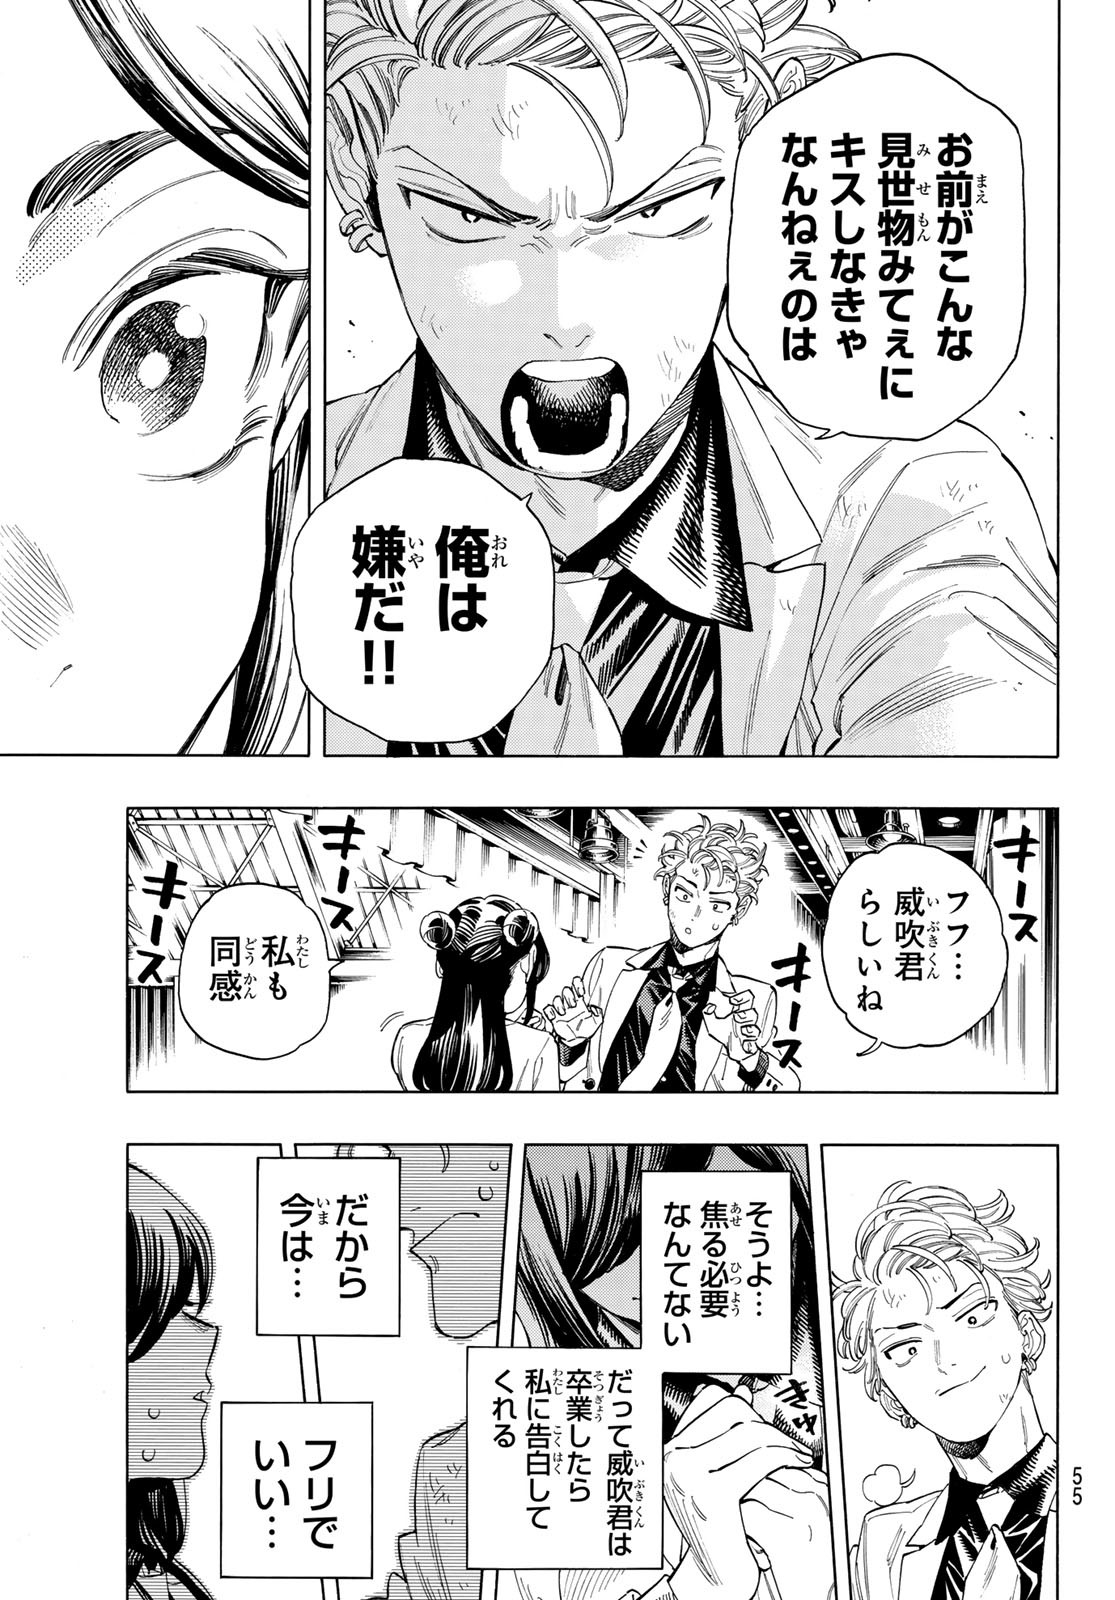 Akabane Honeko no Bodyguard - Chapter 64 - Page 19